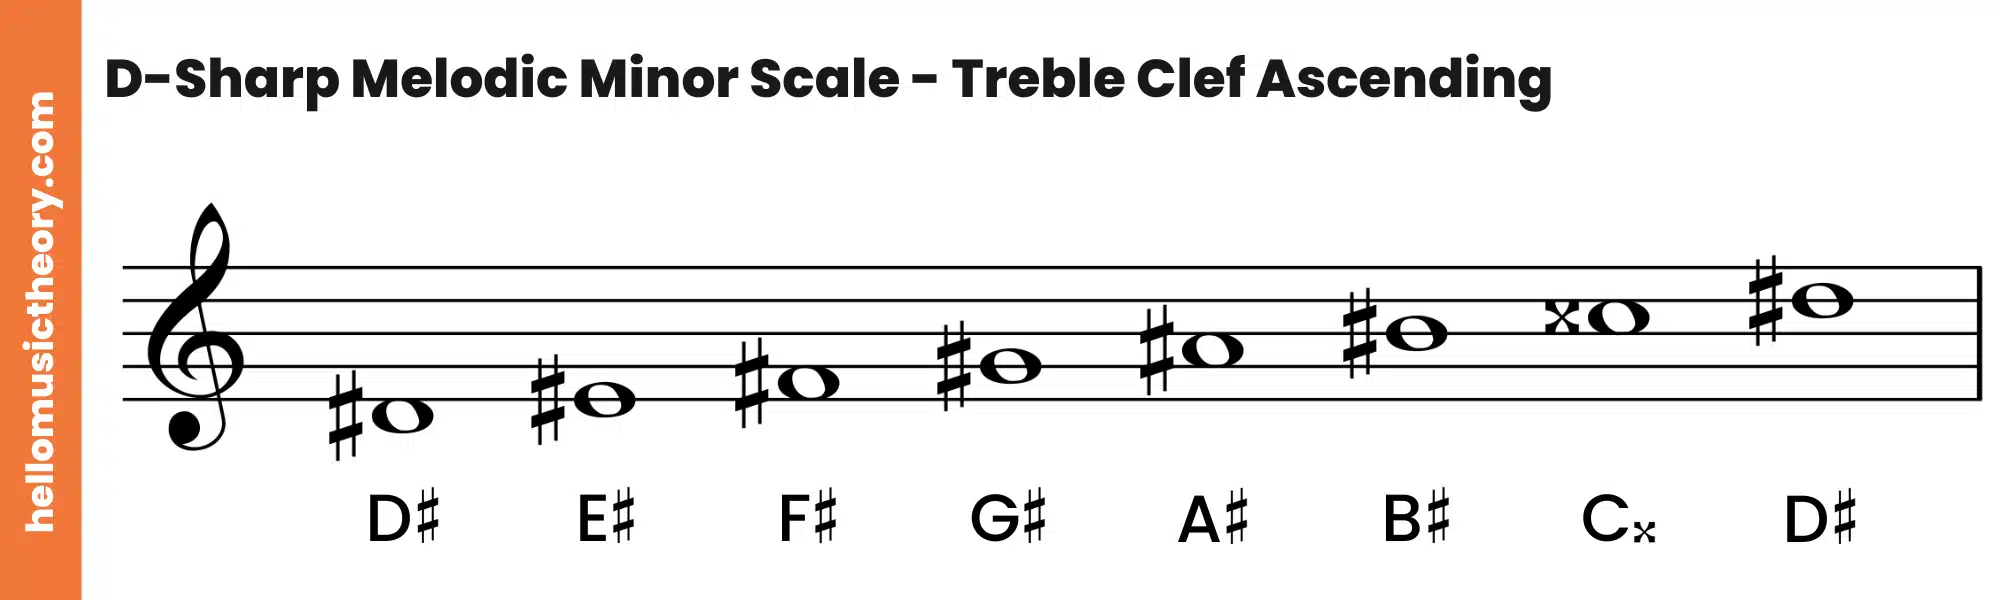 D-Sharp Melodic Minor Scale Treble Clef Ascending